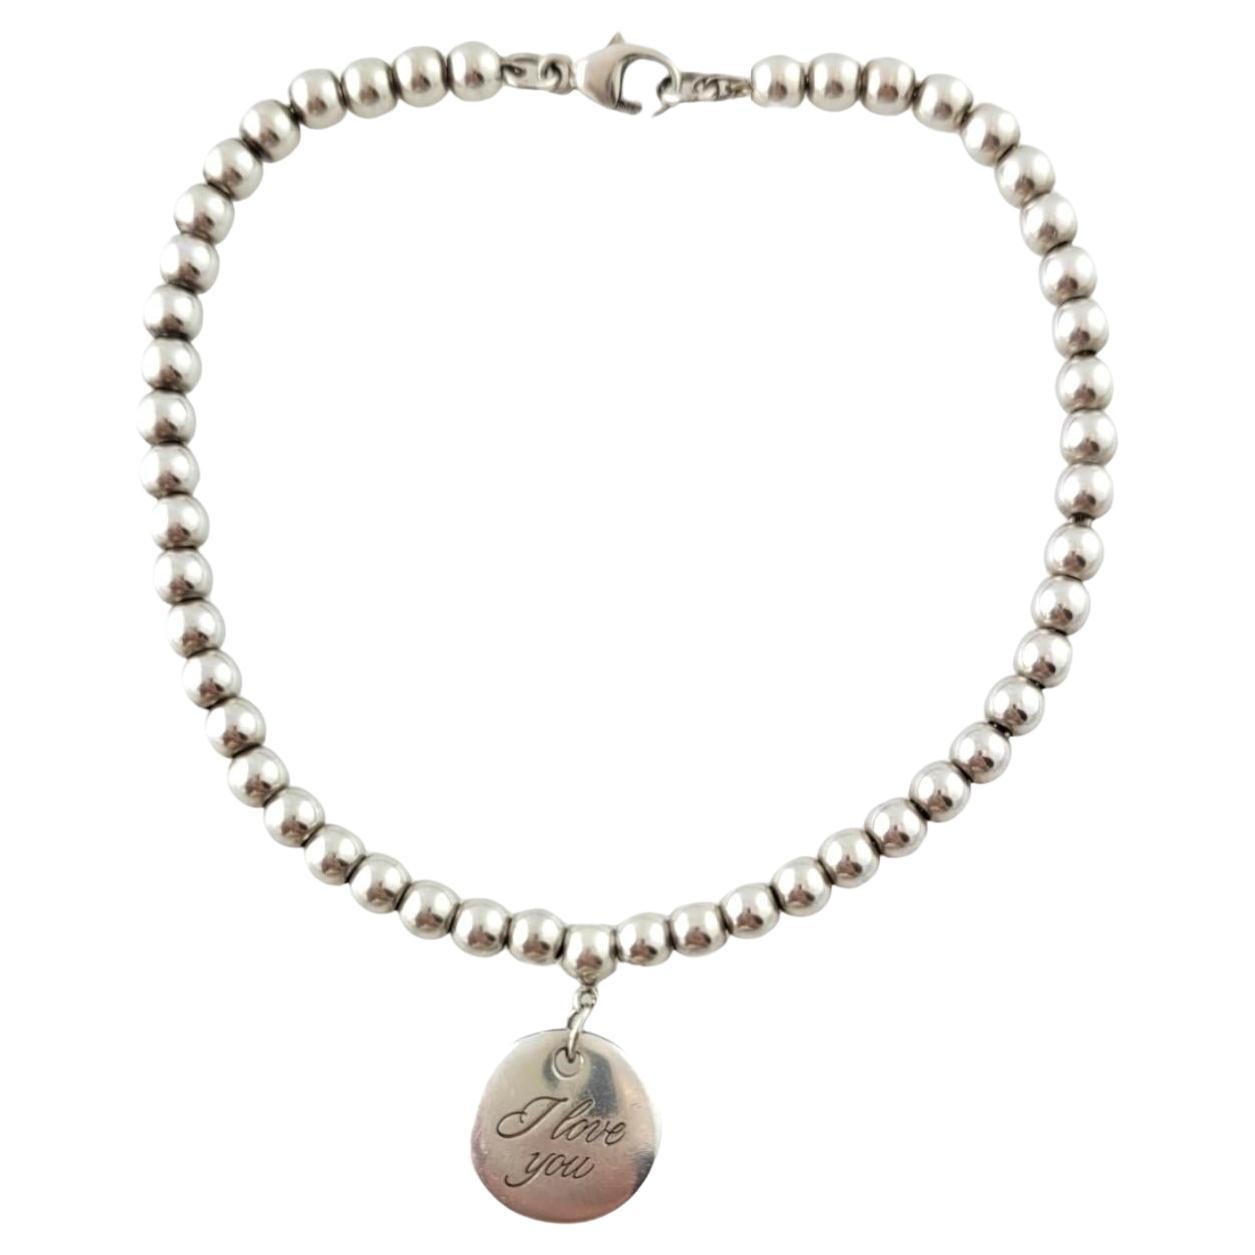 Tiffany & Co. Sterling Silver I Love You Tag Bead Bracelet #17470